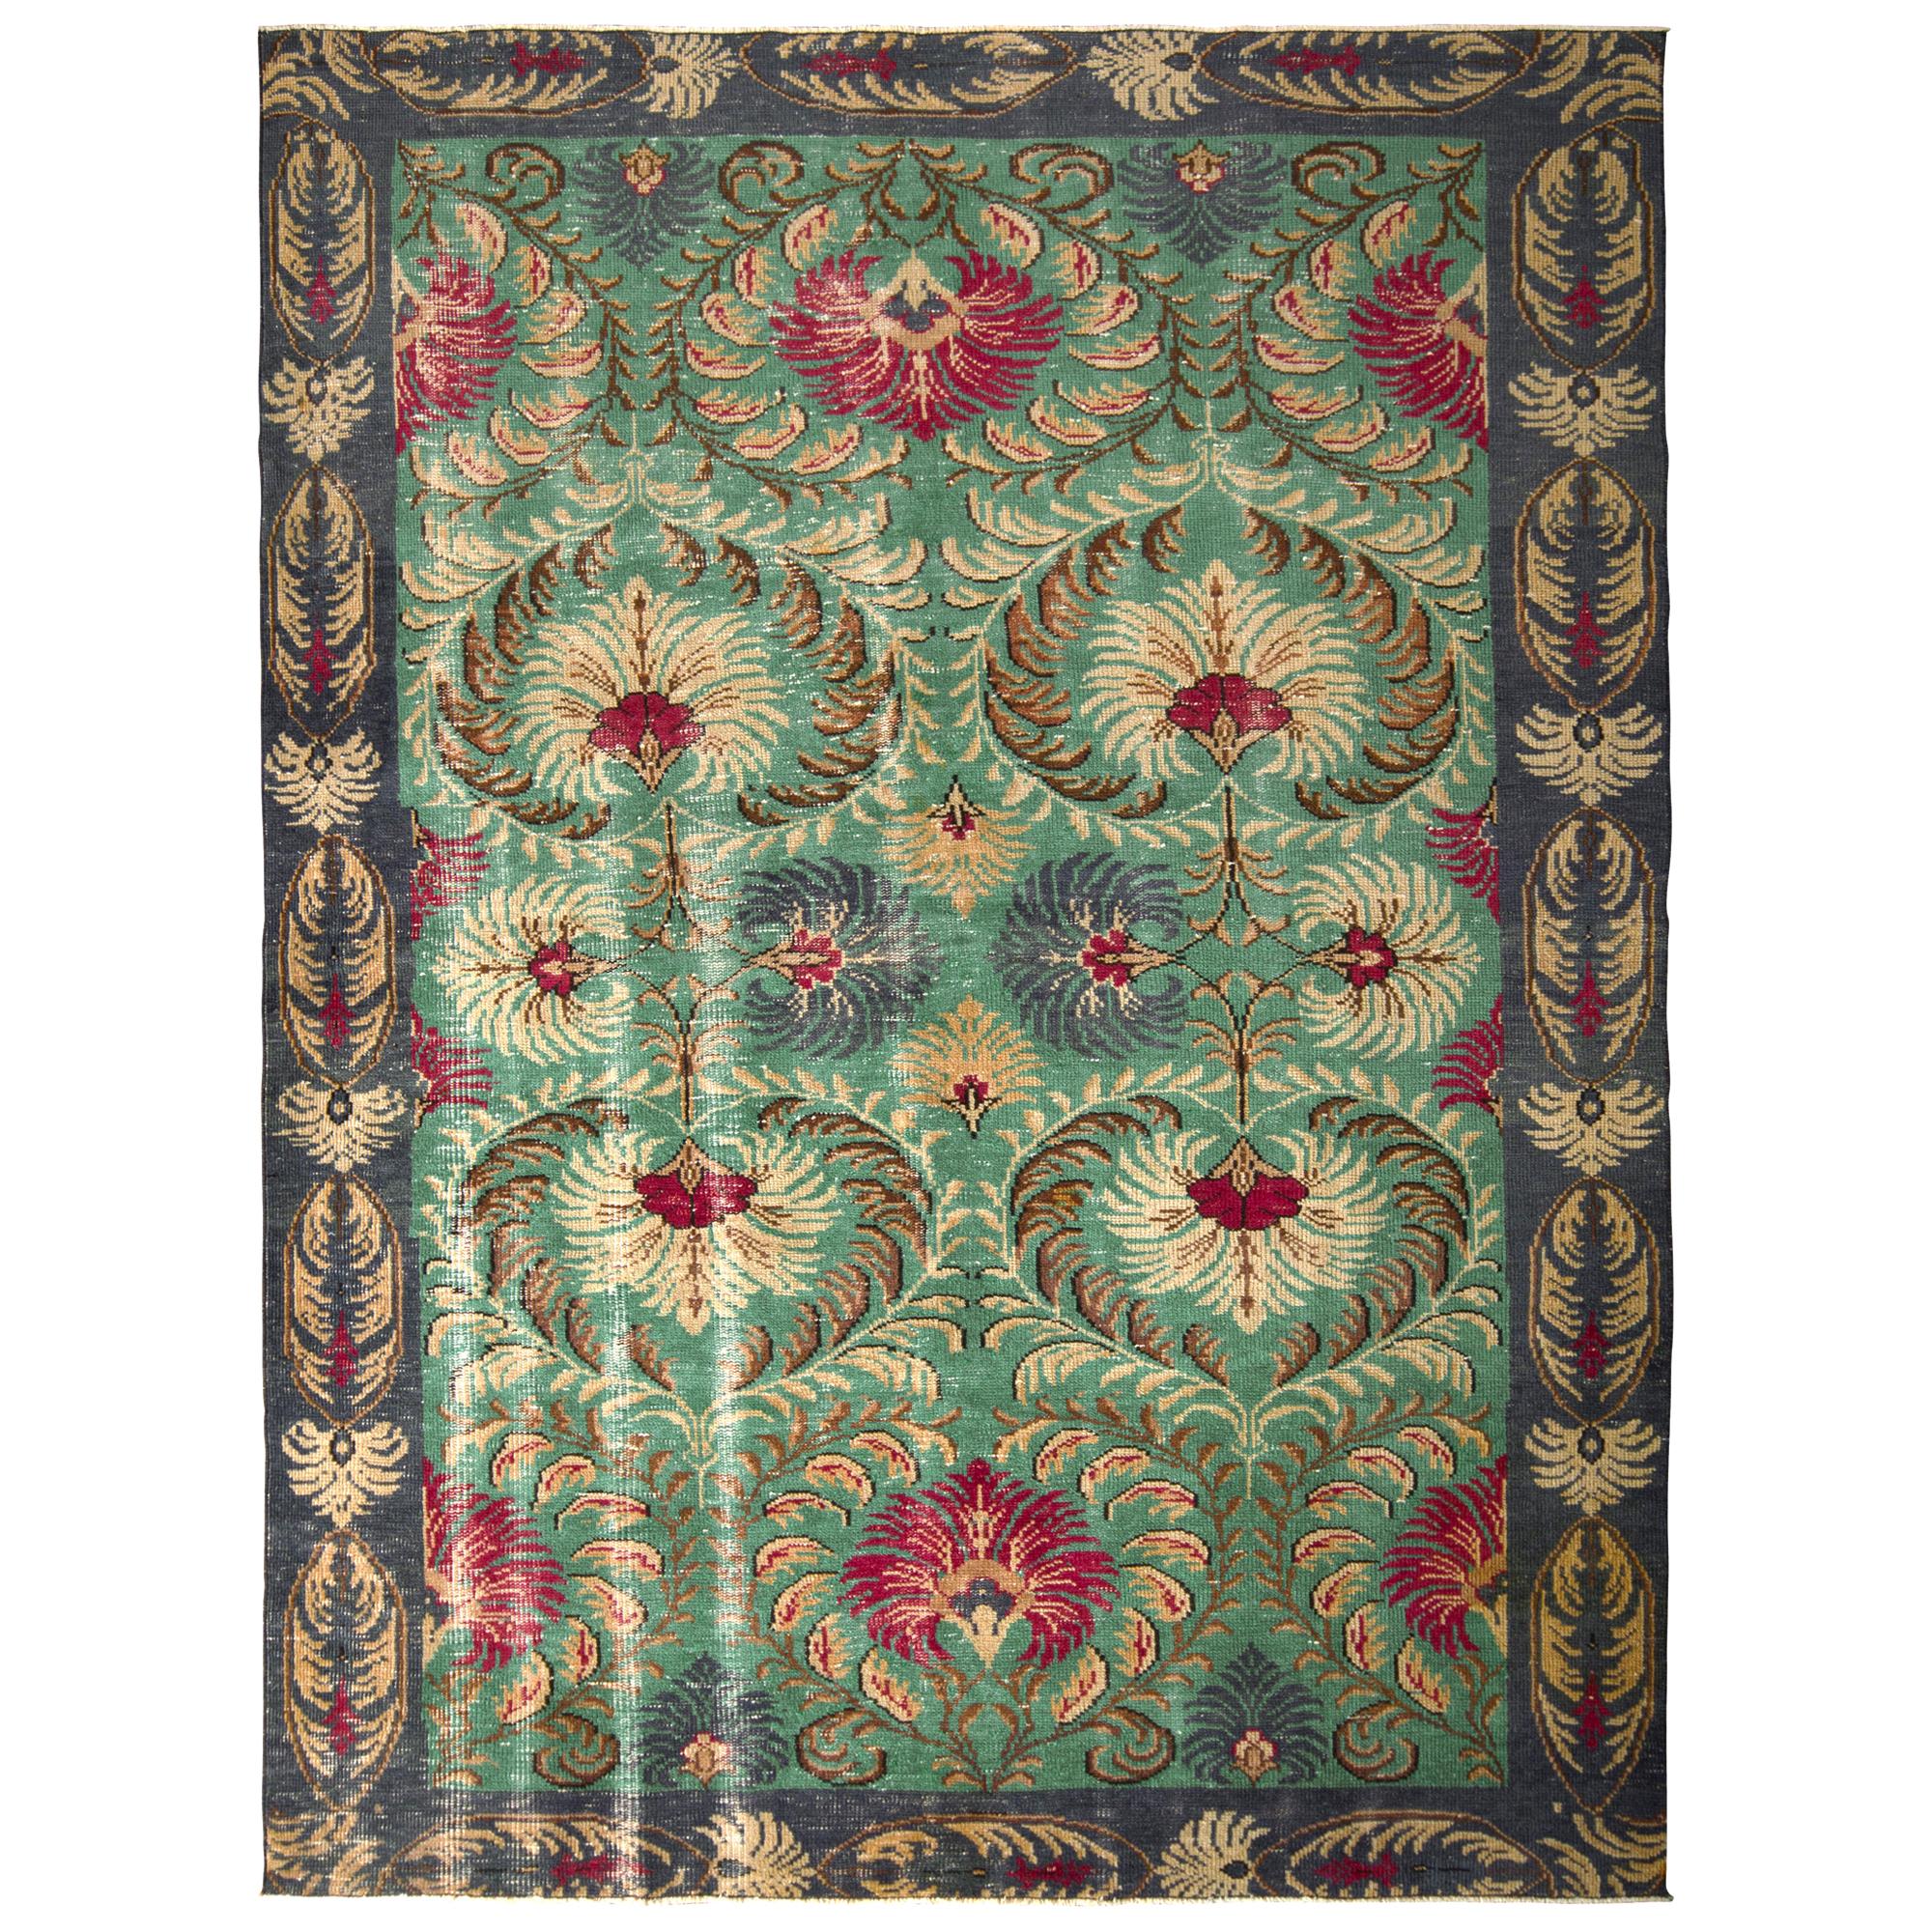 1950s Midcentury Rug Green Floral Vintage Turkish Carpet